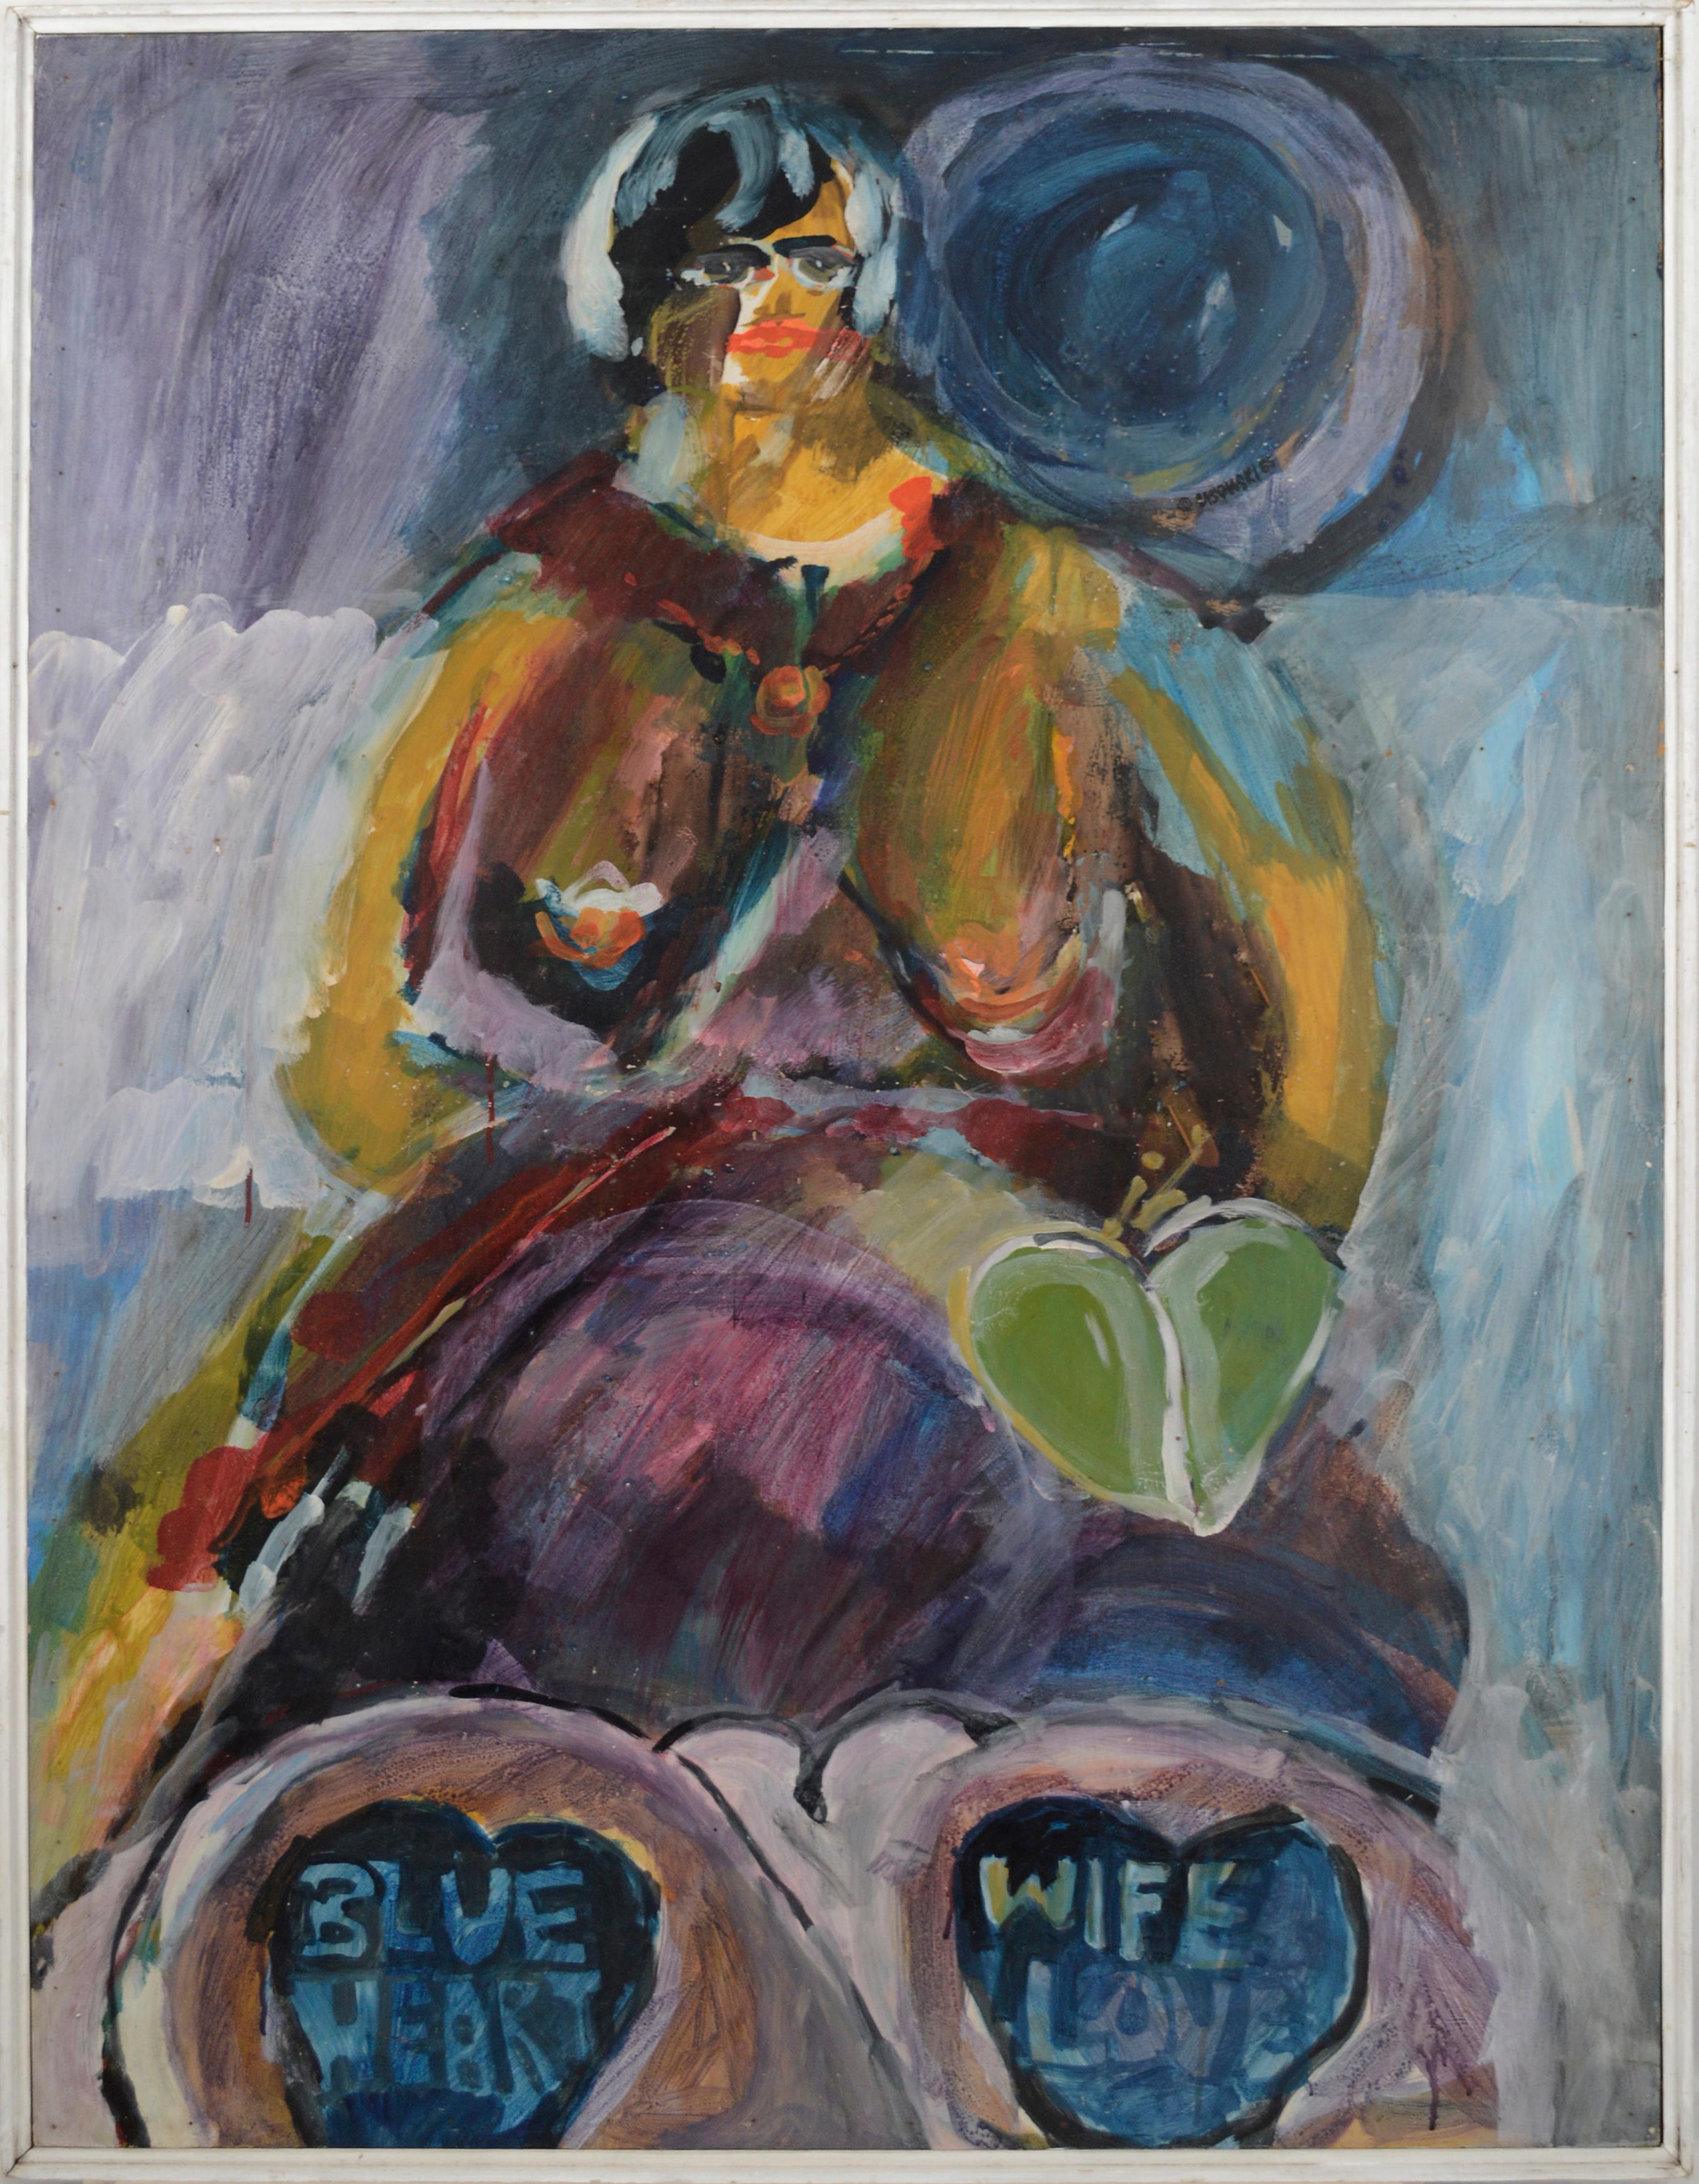 "Blue Heart Wife Love", école figurative de San Francisco -Joe Lysowski "Prankster"